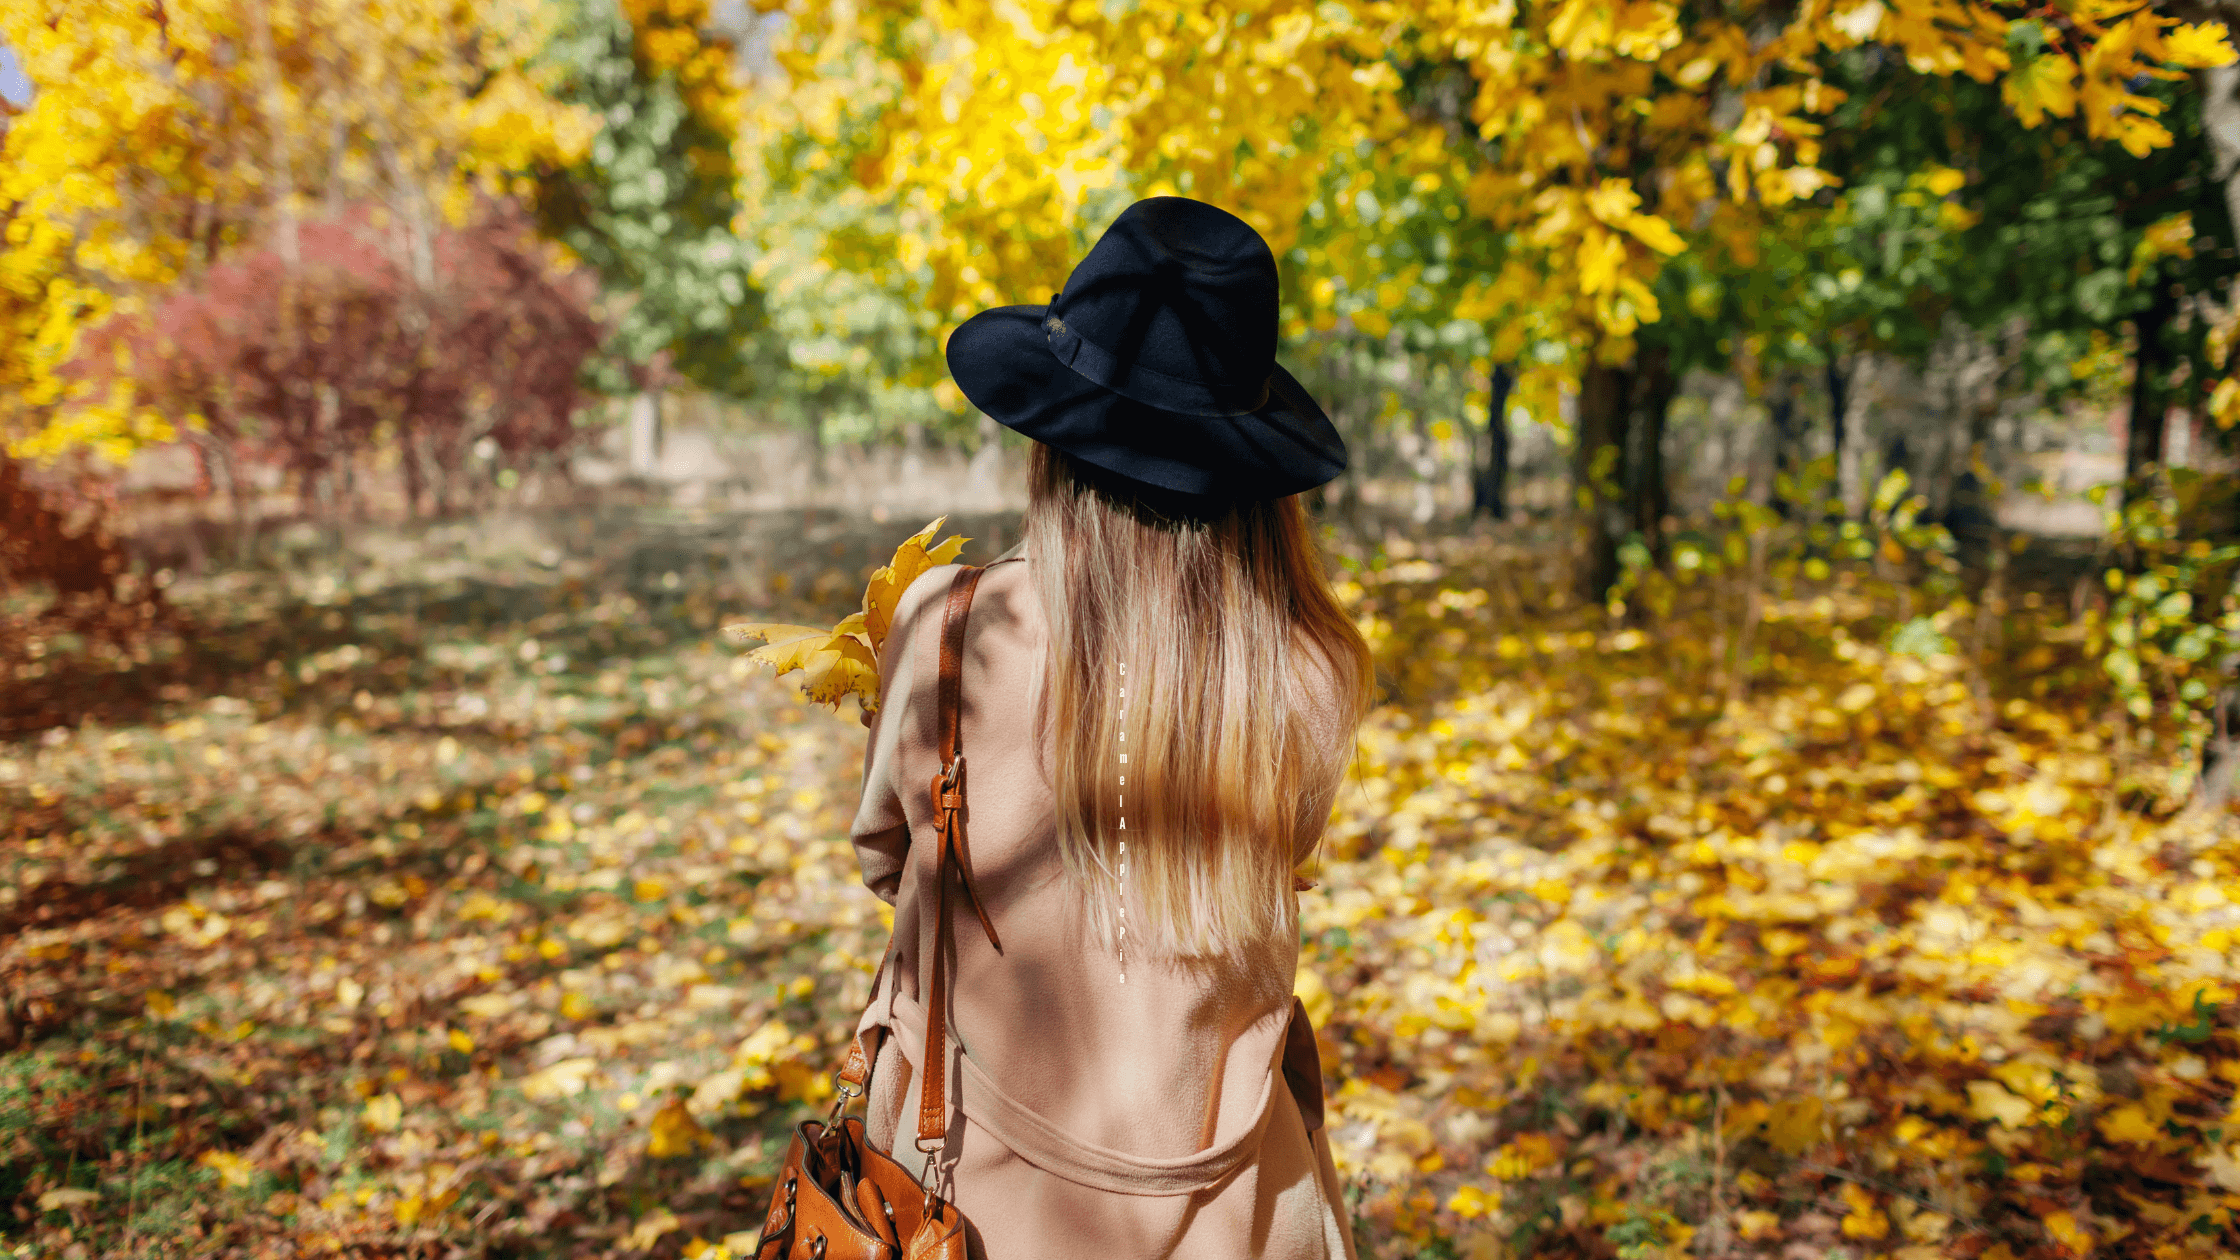 walking among fall leaves